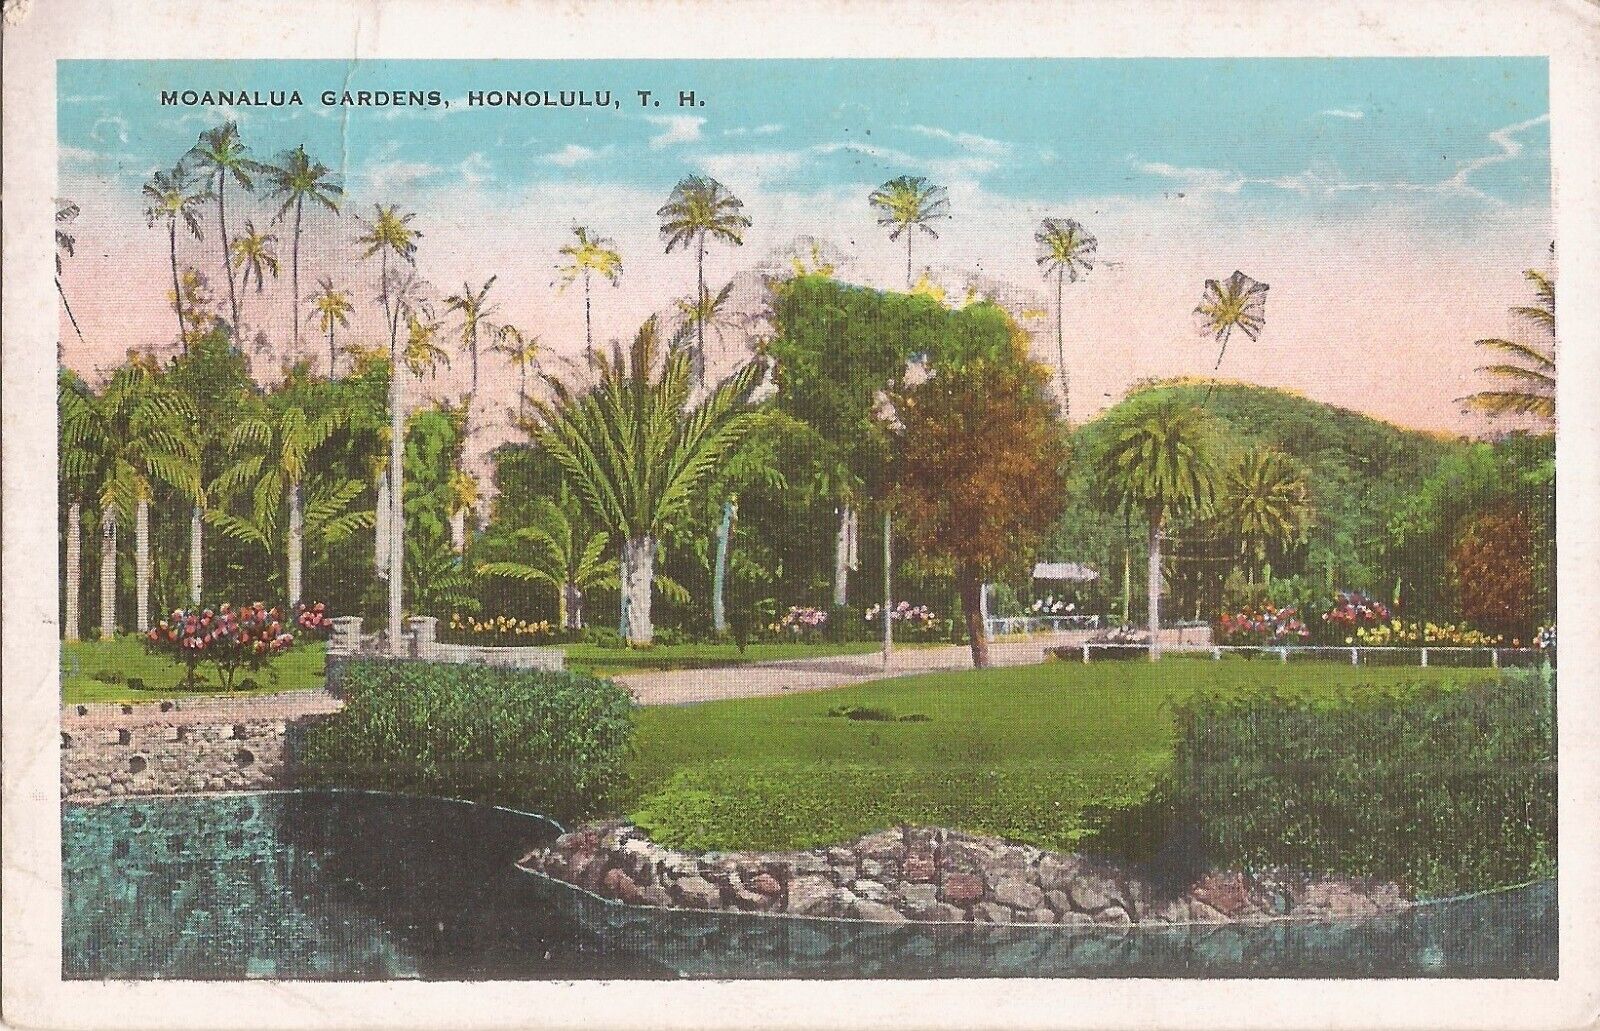 Honolulu, Territory of Hawaii - Moanalua Gardens - 1932